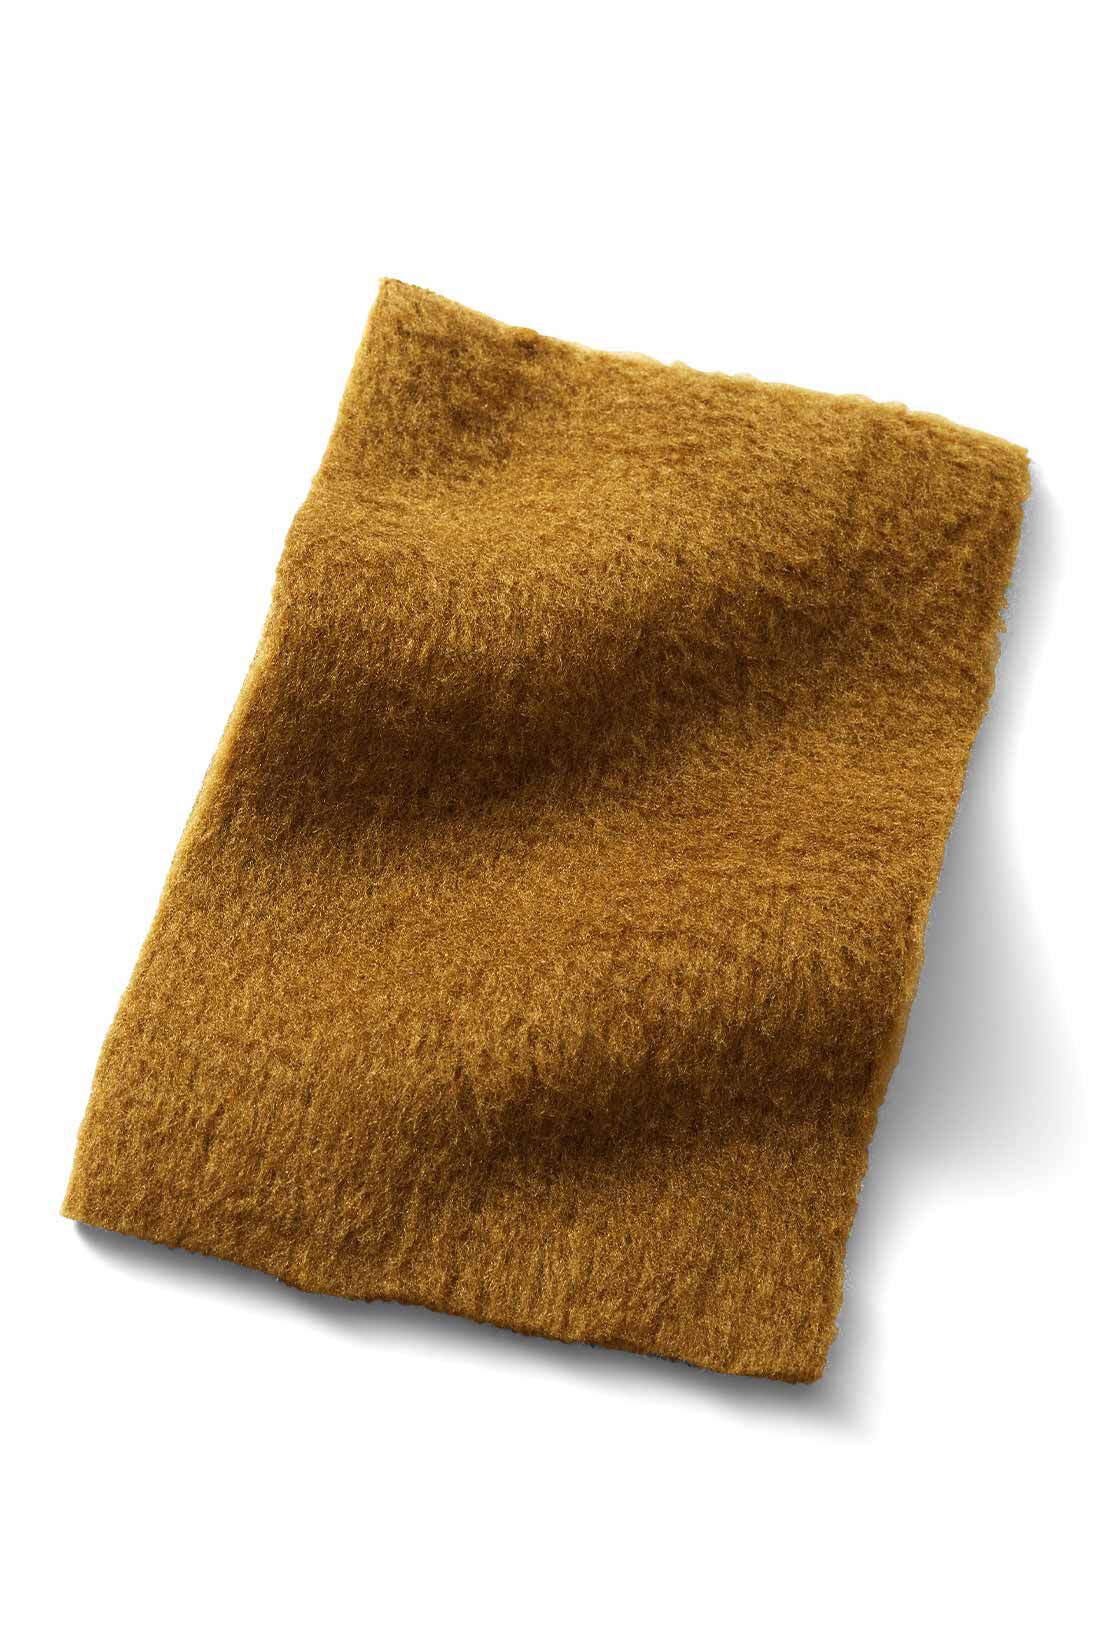 MEDE19F|MEDE19F　やわらかフリースのミリタリープルオーバー〈カーキ〉|少し長めの毛足が滑らかであたたかい、やや厚みのあるフリース素材。別布はコントラストを生むポリエステル素材。